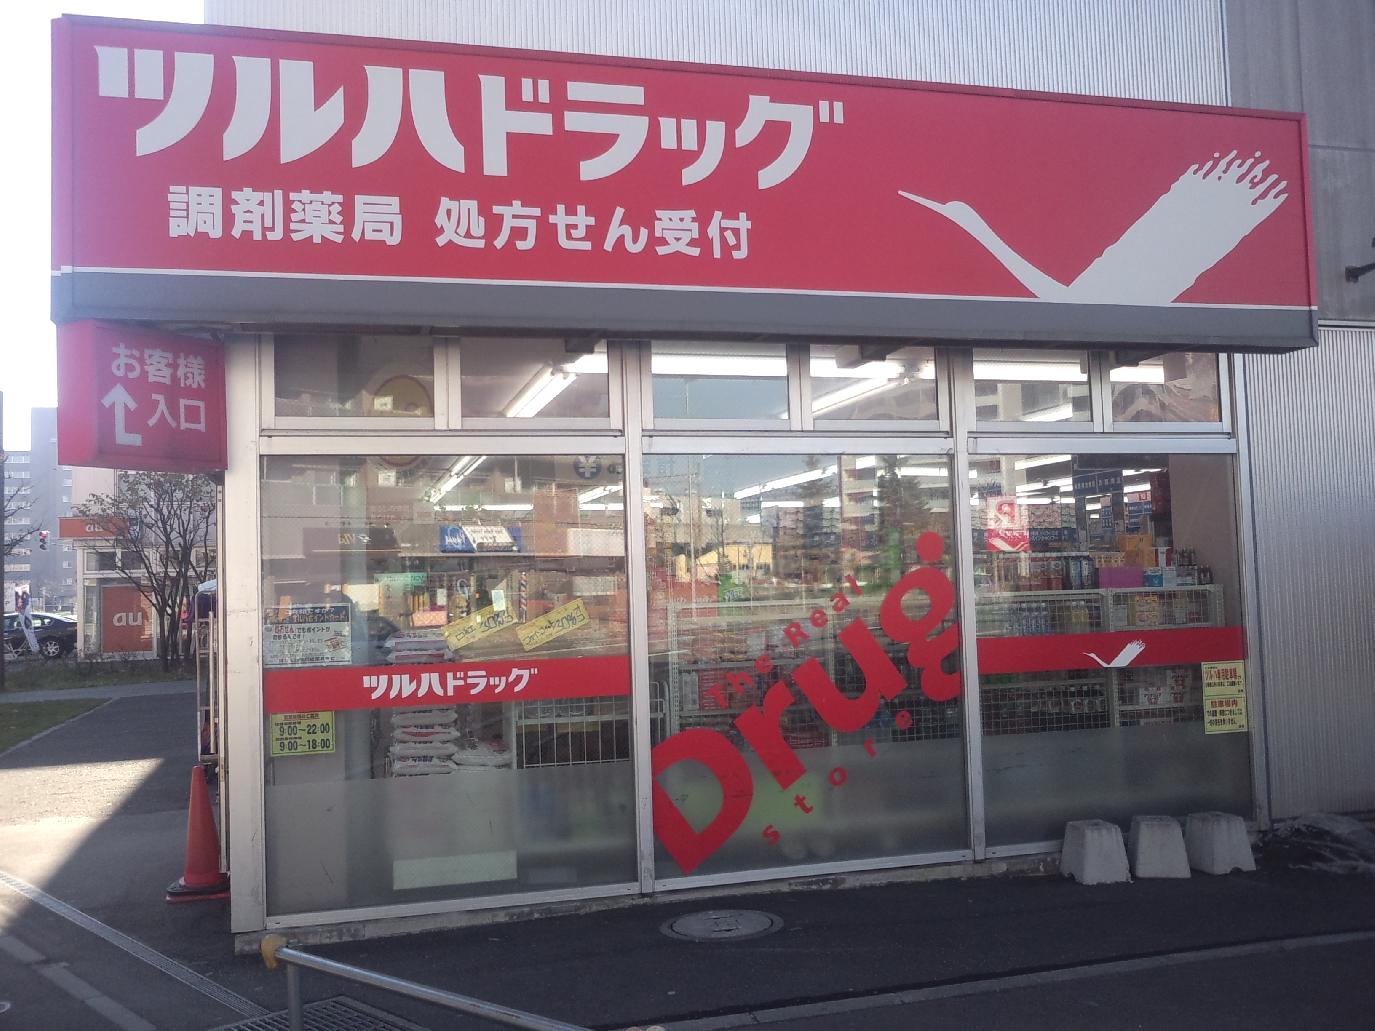 Dorakkusutoa. Pharmacy Tsuruha drag Mulberry shop 856m until (drugstore)